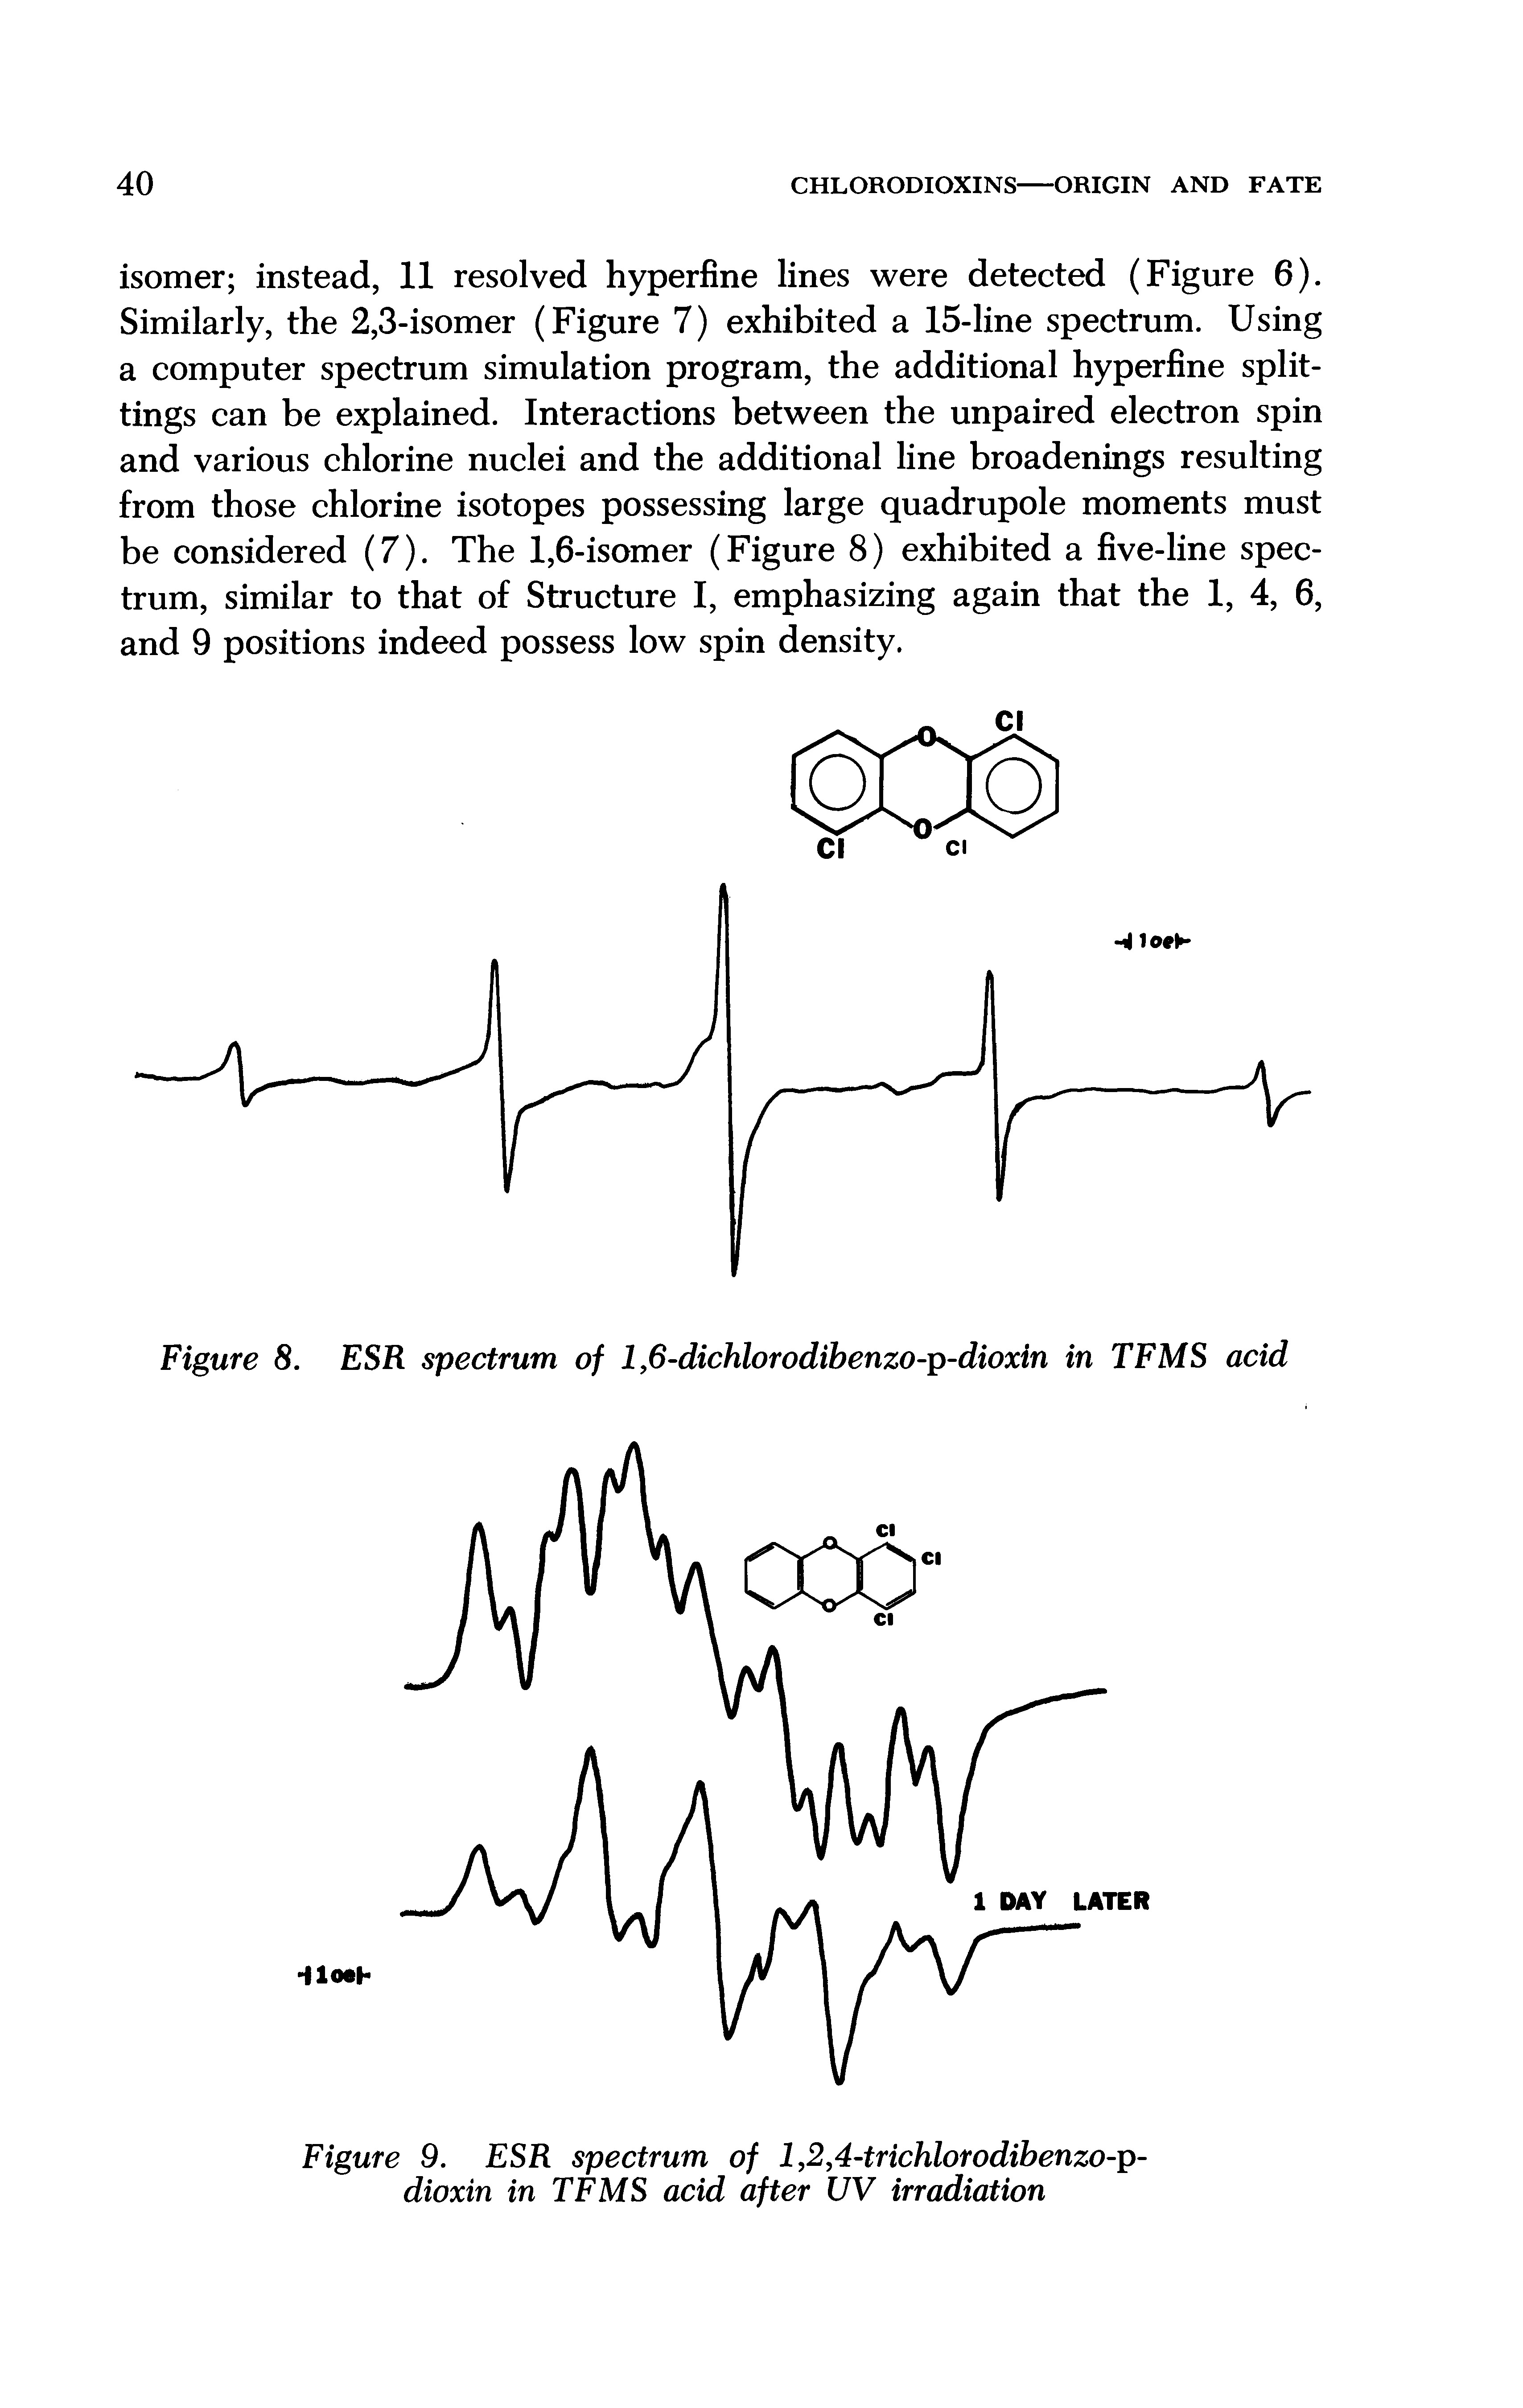 Figure 9. ESR spectrum of 1,2,4-trichlorodihenzo-p-dioxin in TFMS acid after UV irradiation...